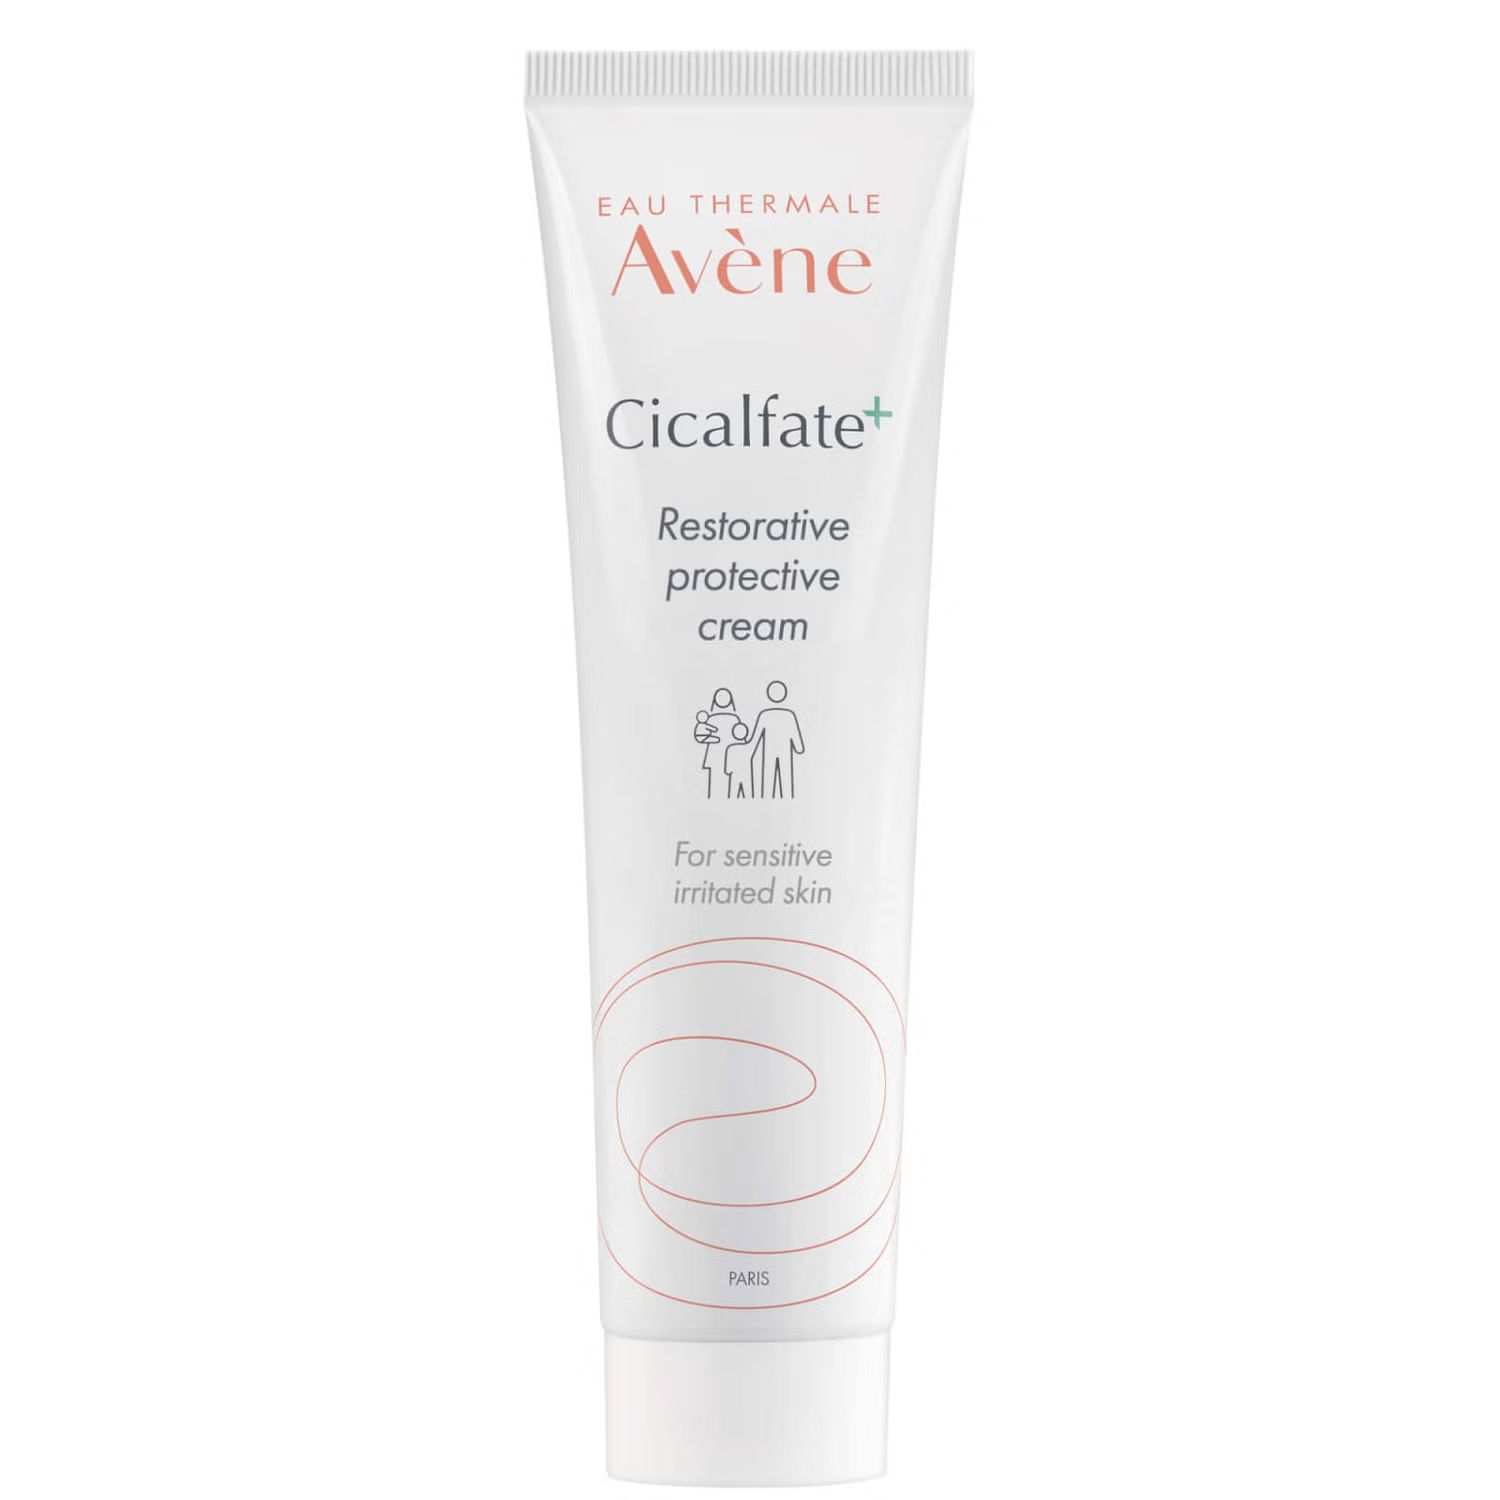 Avène Cicalfate+ Restorative Protective Cream 100ml | Look Fantastic (UK)